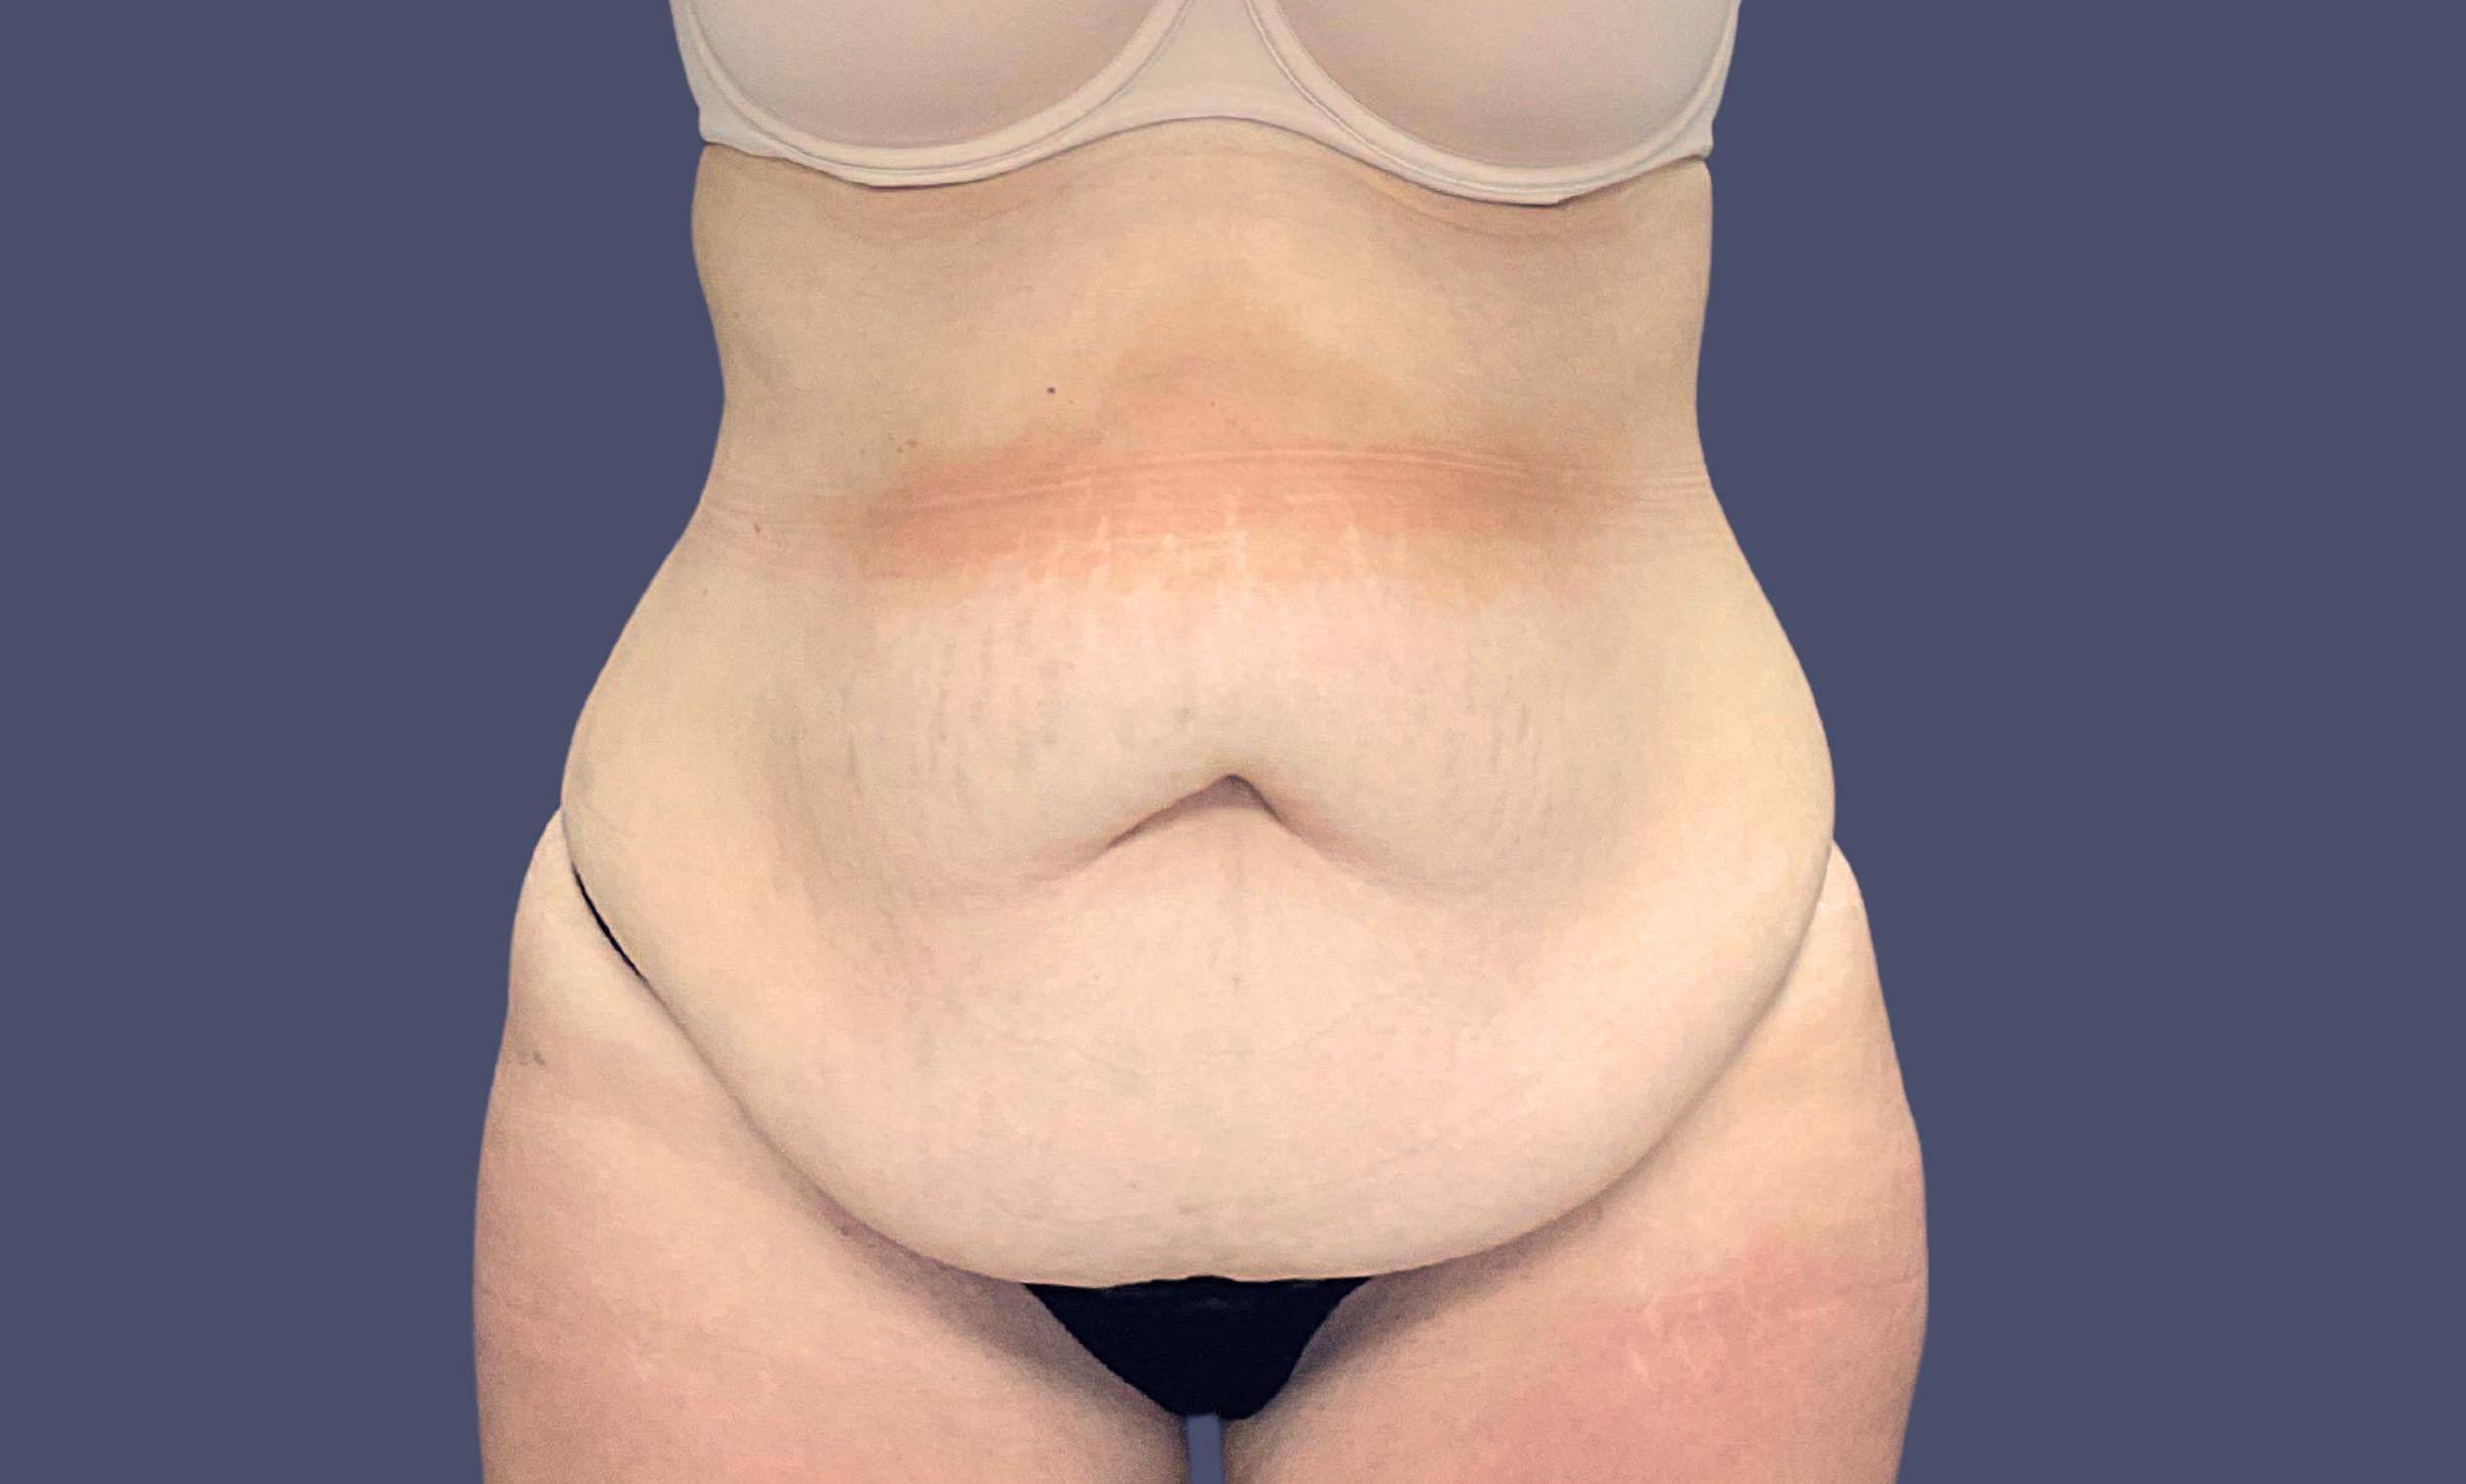 Abdominoplasty (Tummy Tuck) 8 Before